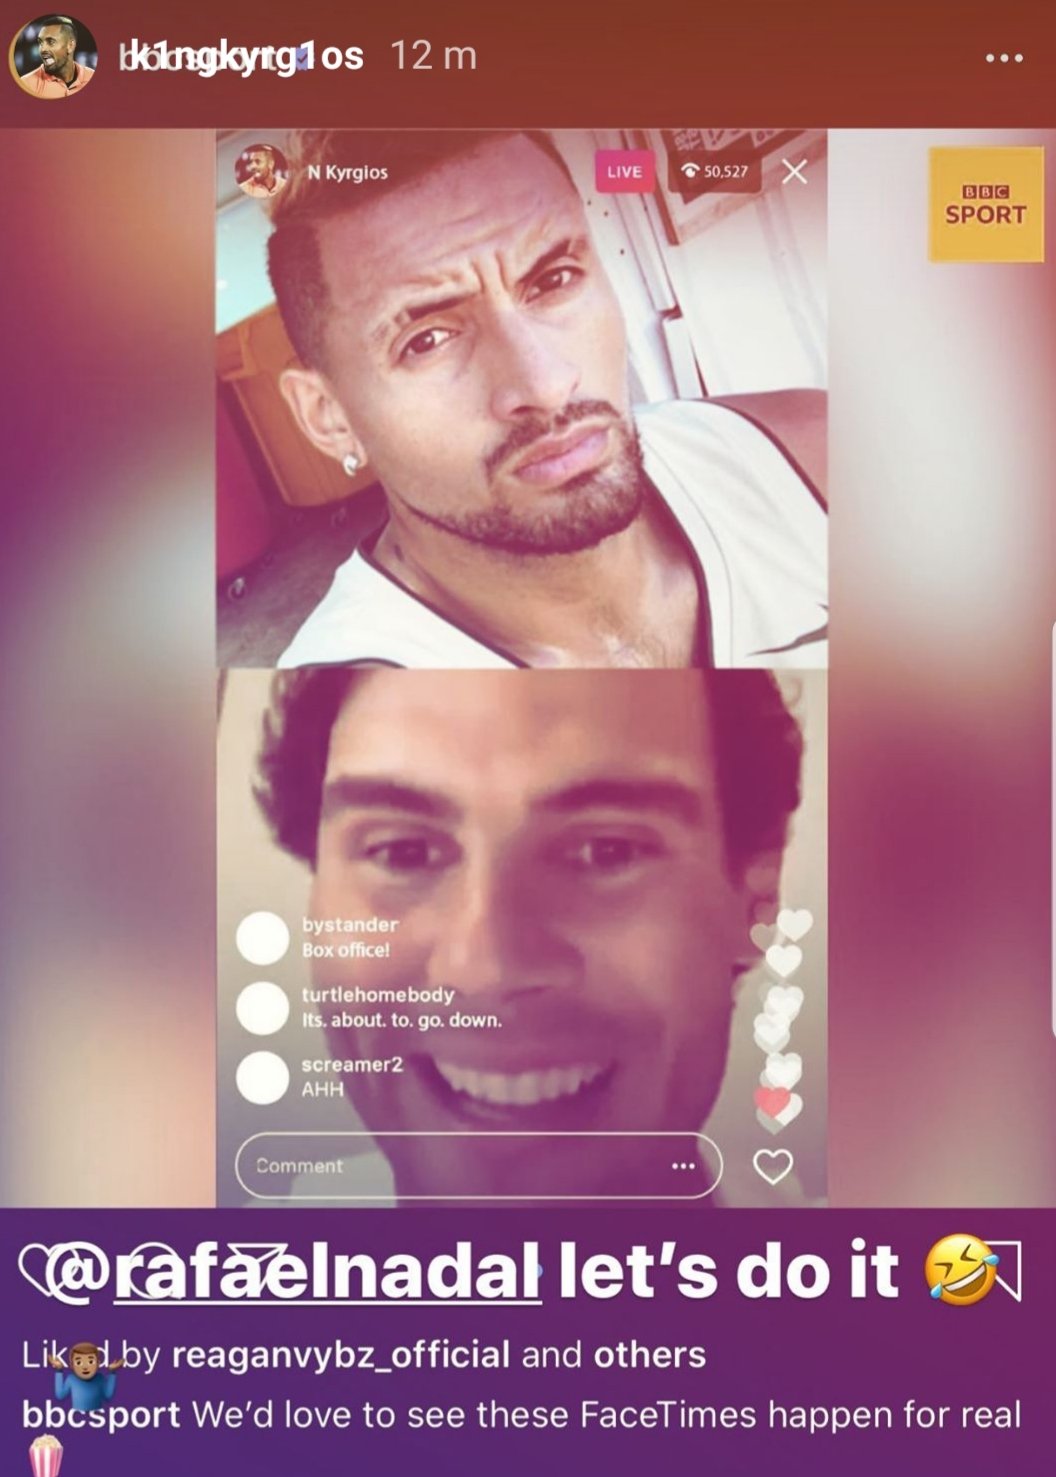 Nick Kyrgios Invites Rafael Nadal for an Instagram Live